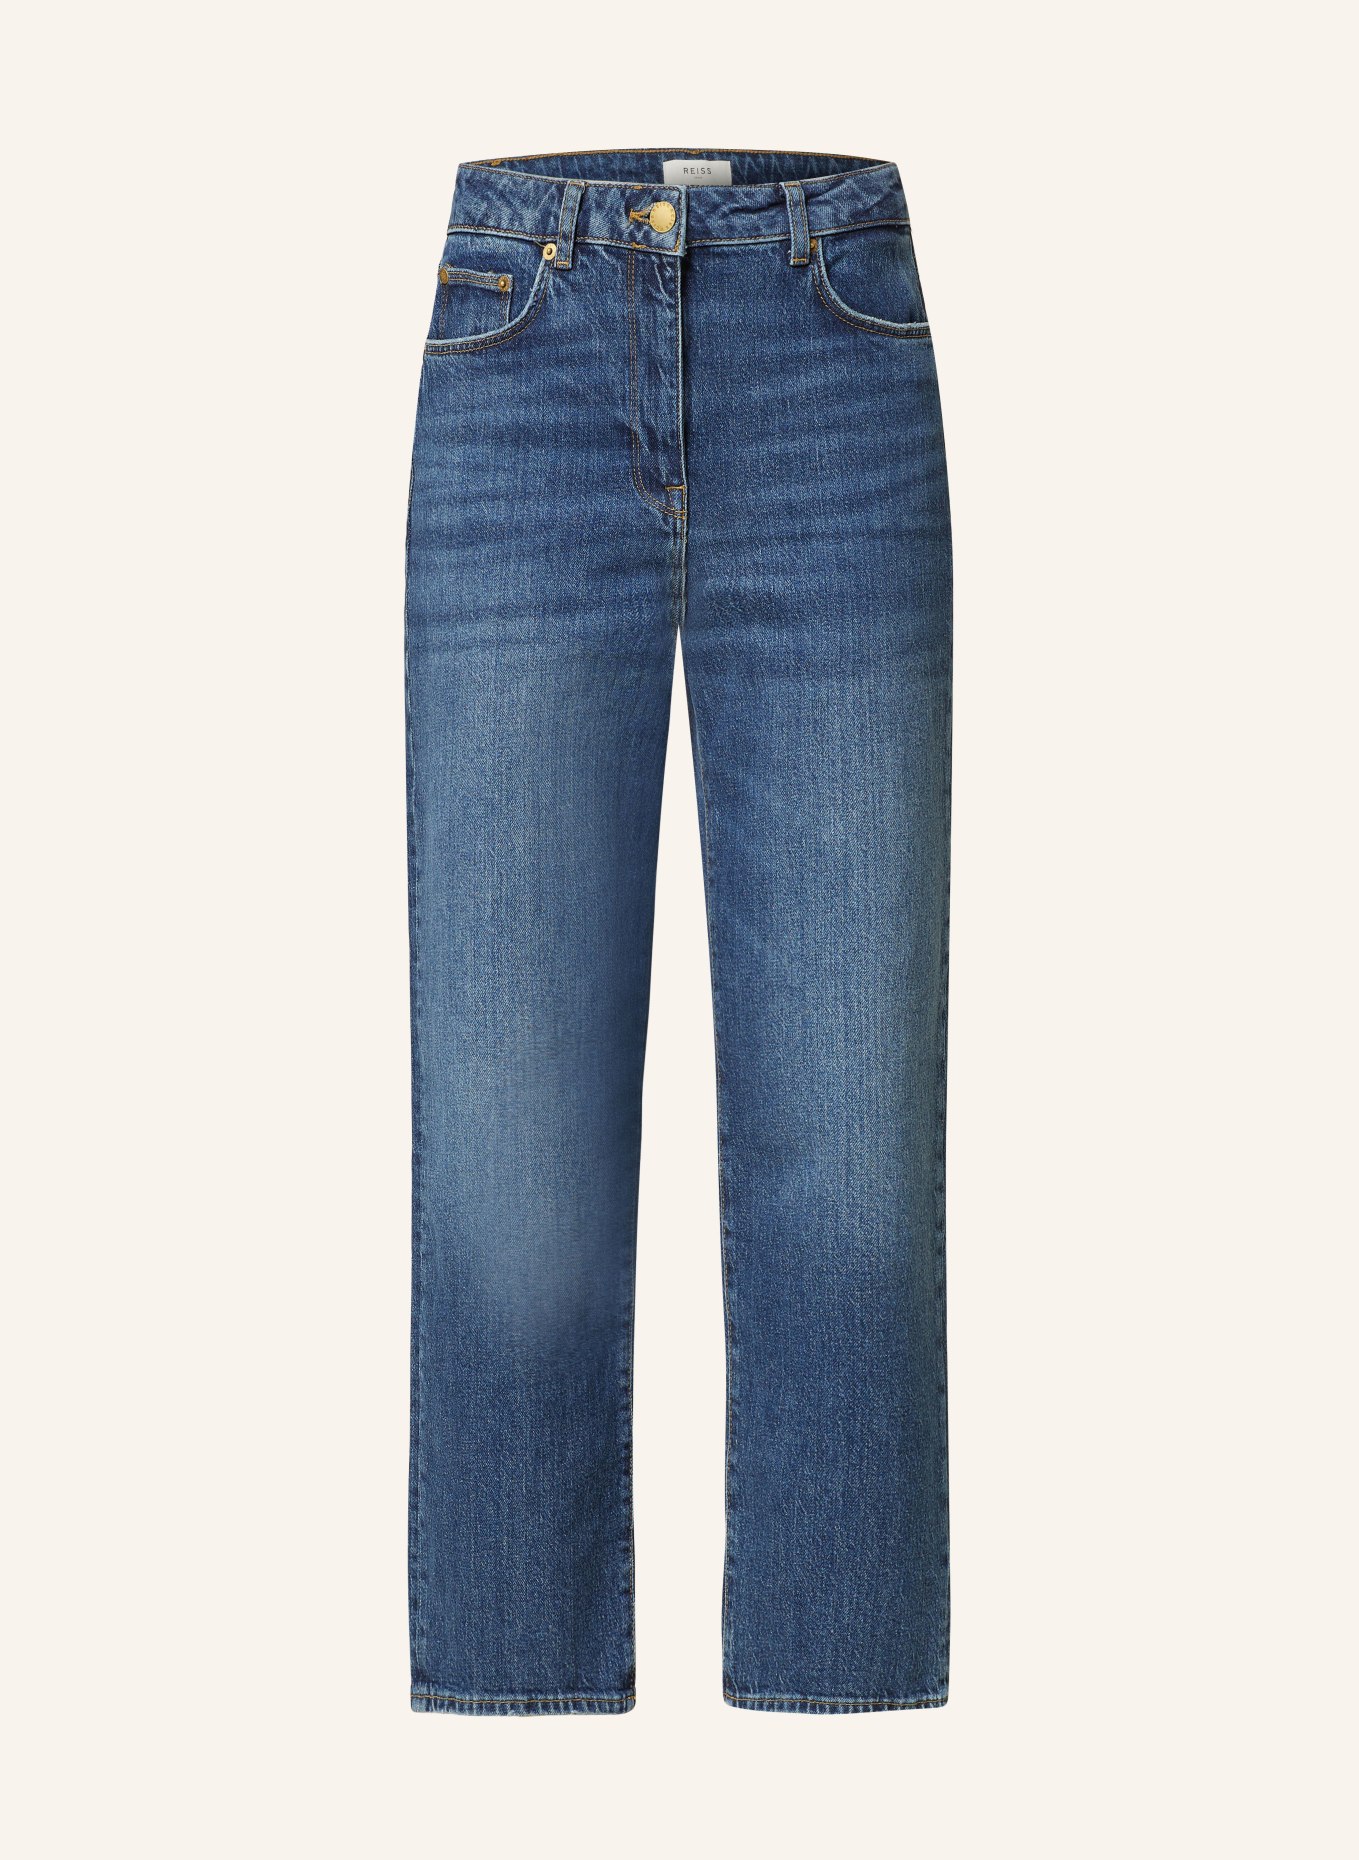 REISS Jeans SELIN, Farbe: 31 MID BLUE (Bild 1)